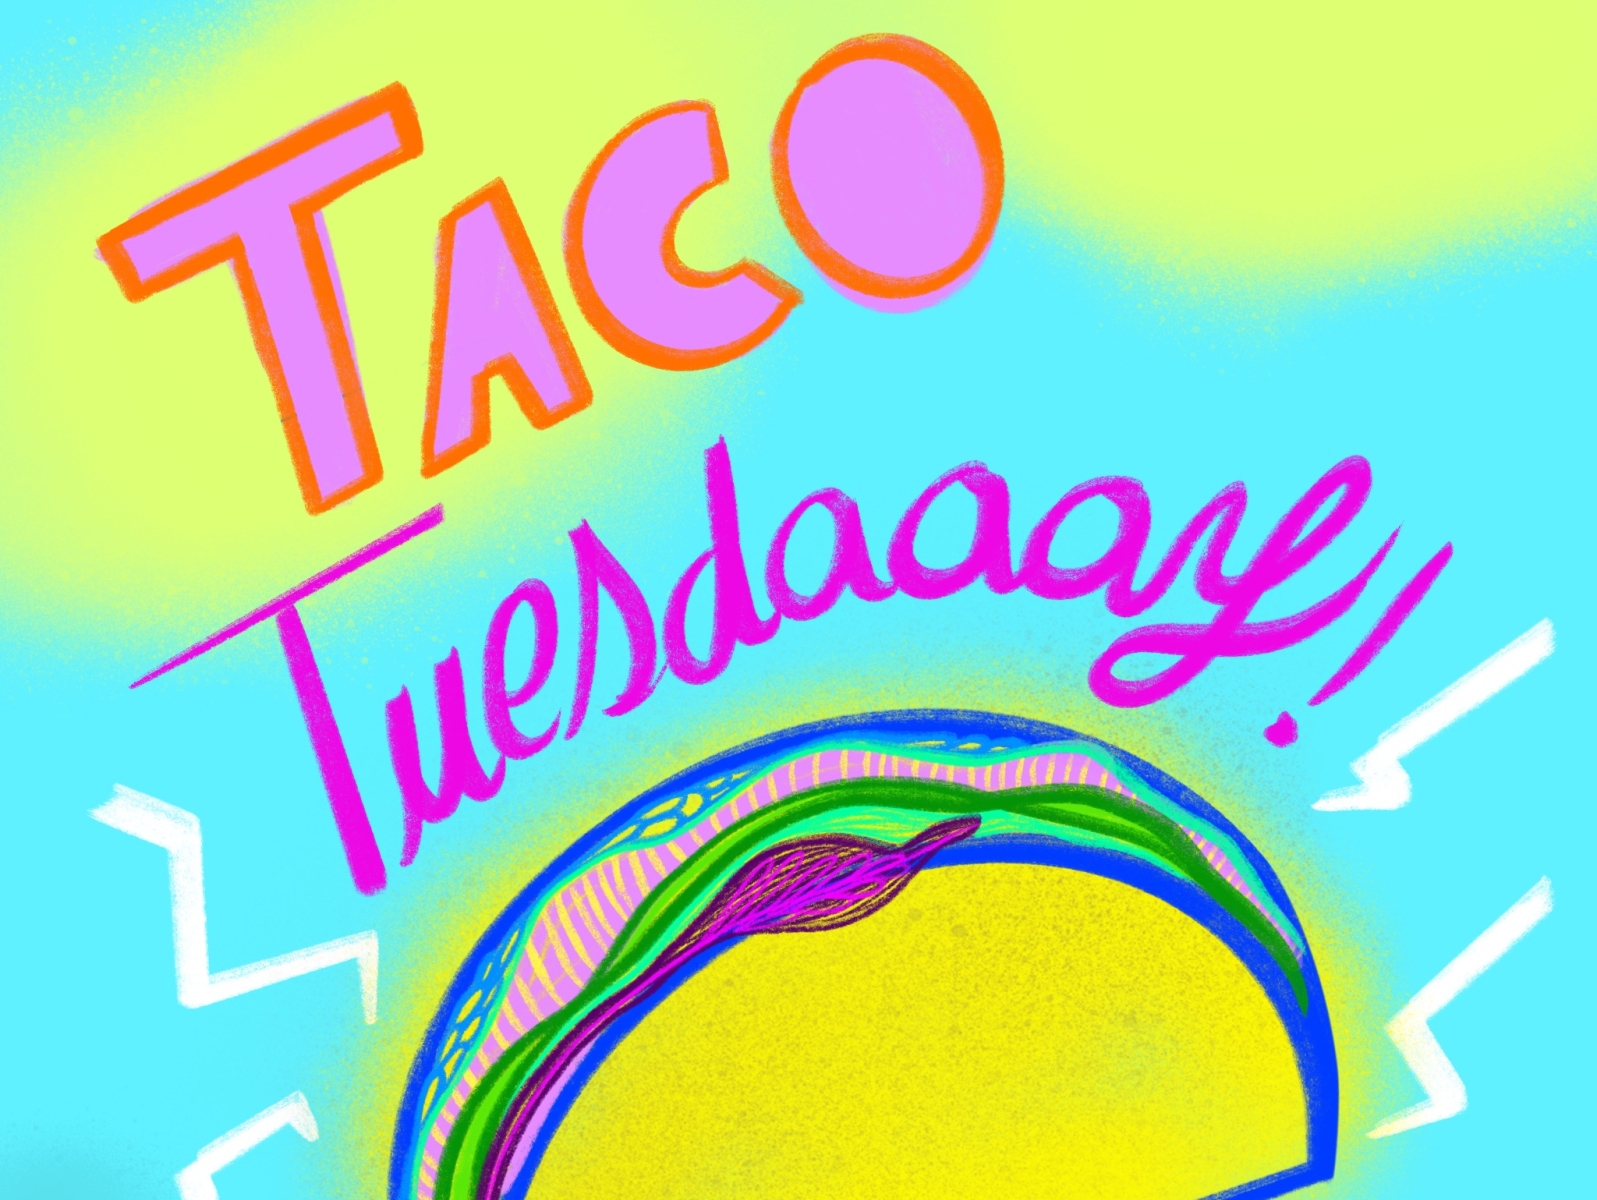 Taco Tuesday by Kat Caro on Dribbble